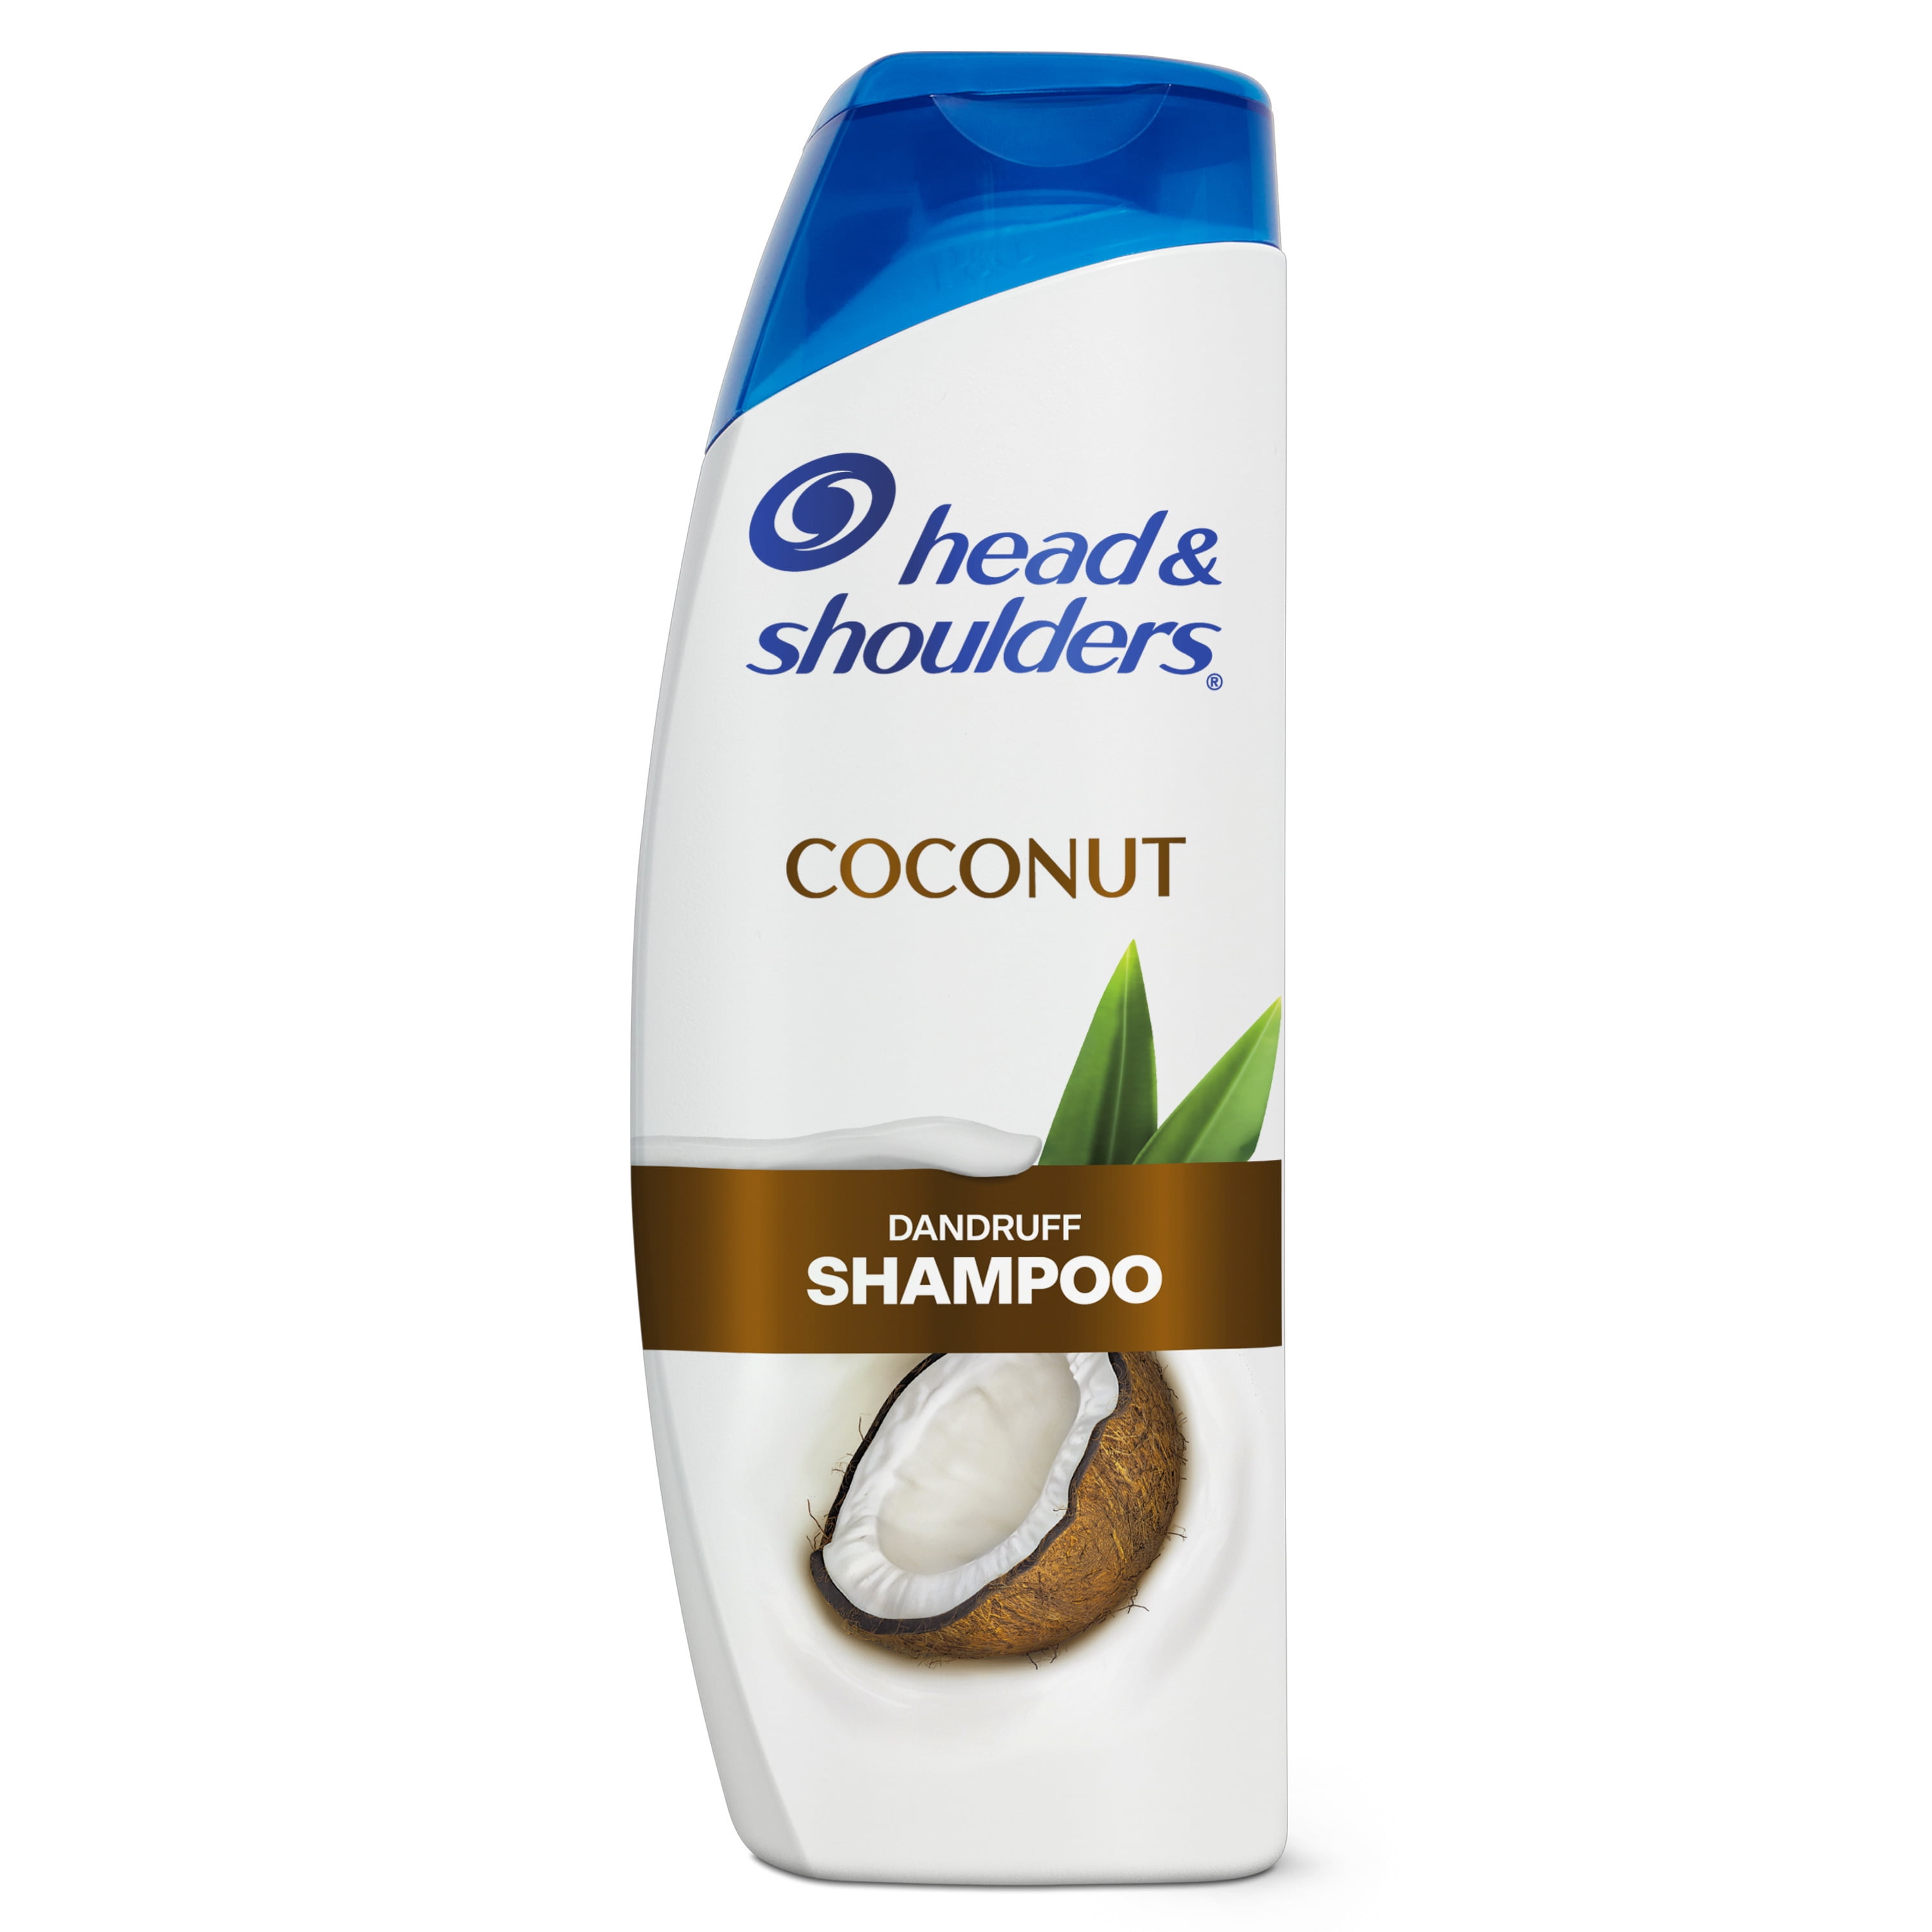 Head and Shoulders Dandruff Shampoo, Coconut, 12.5 oz